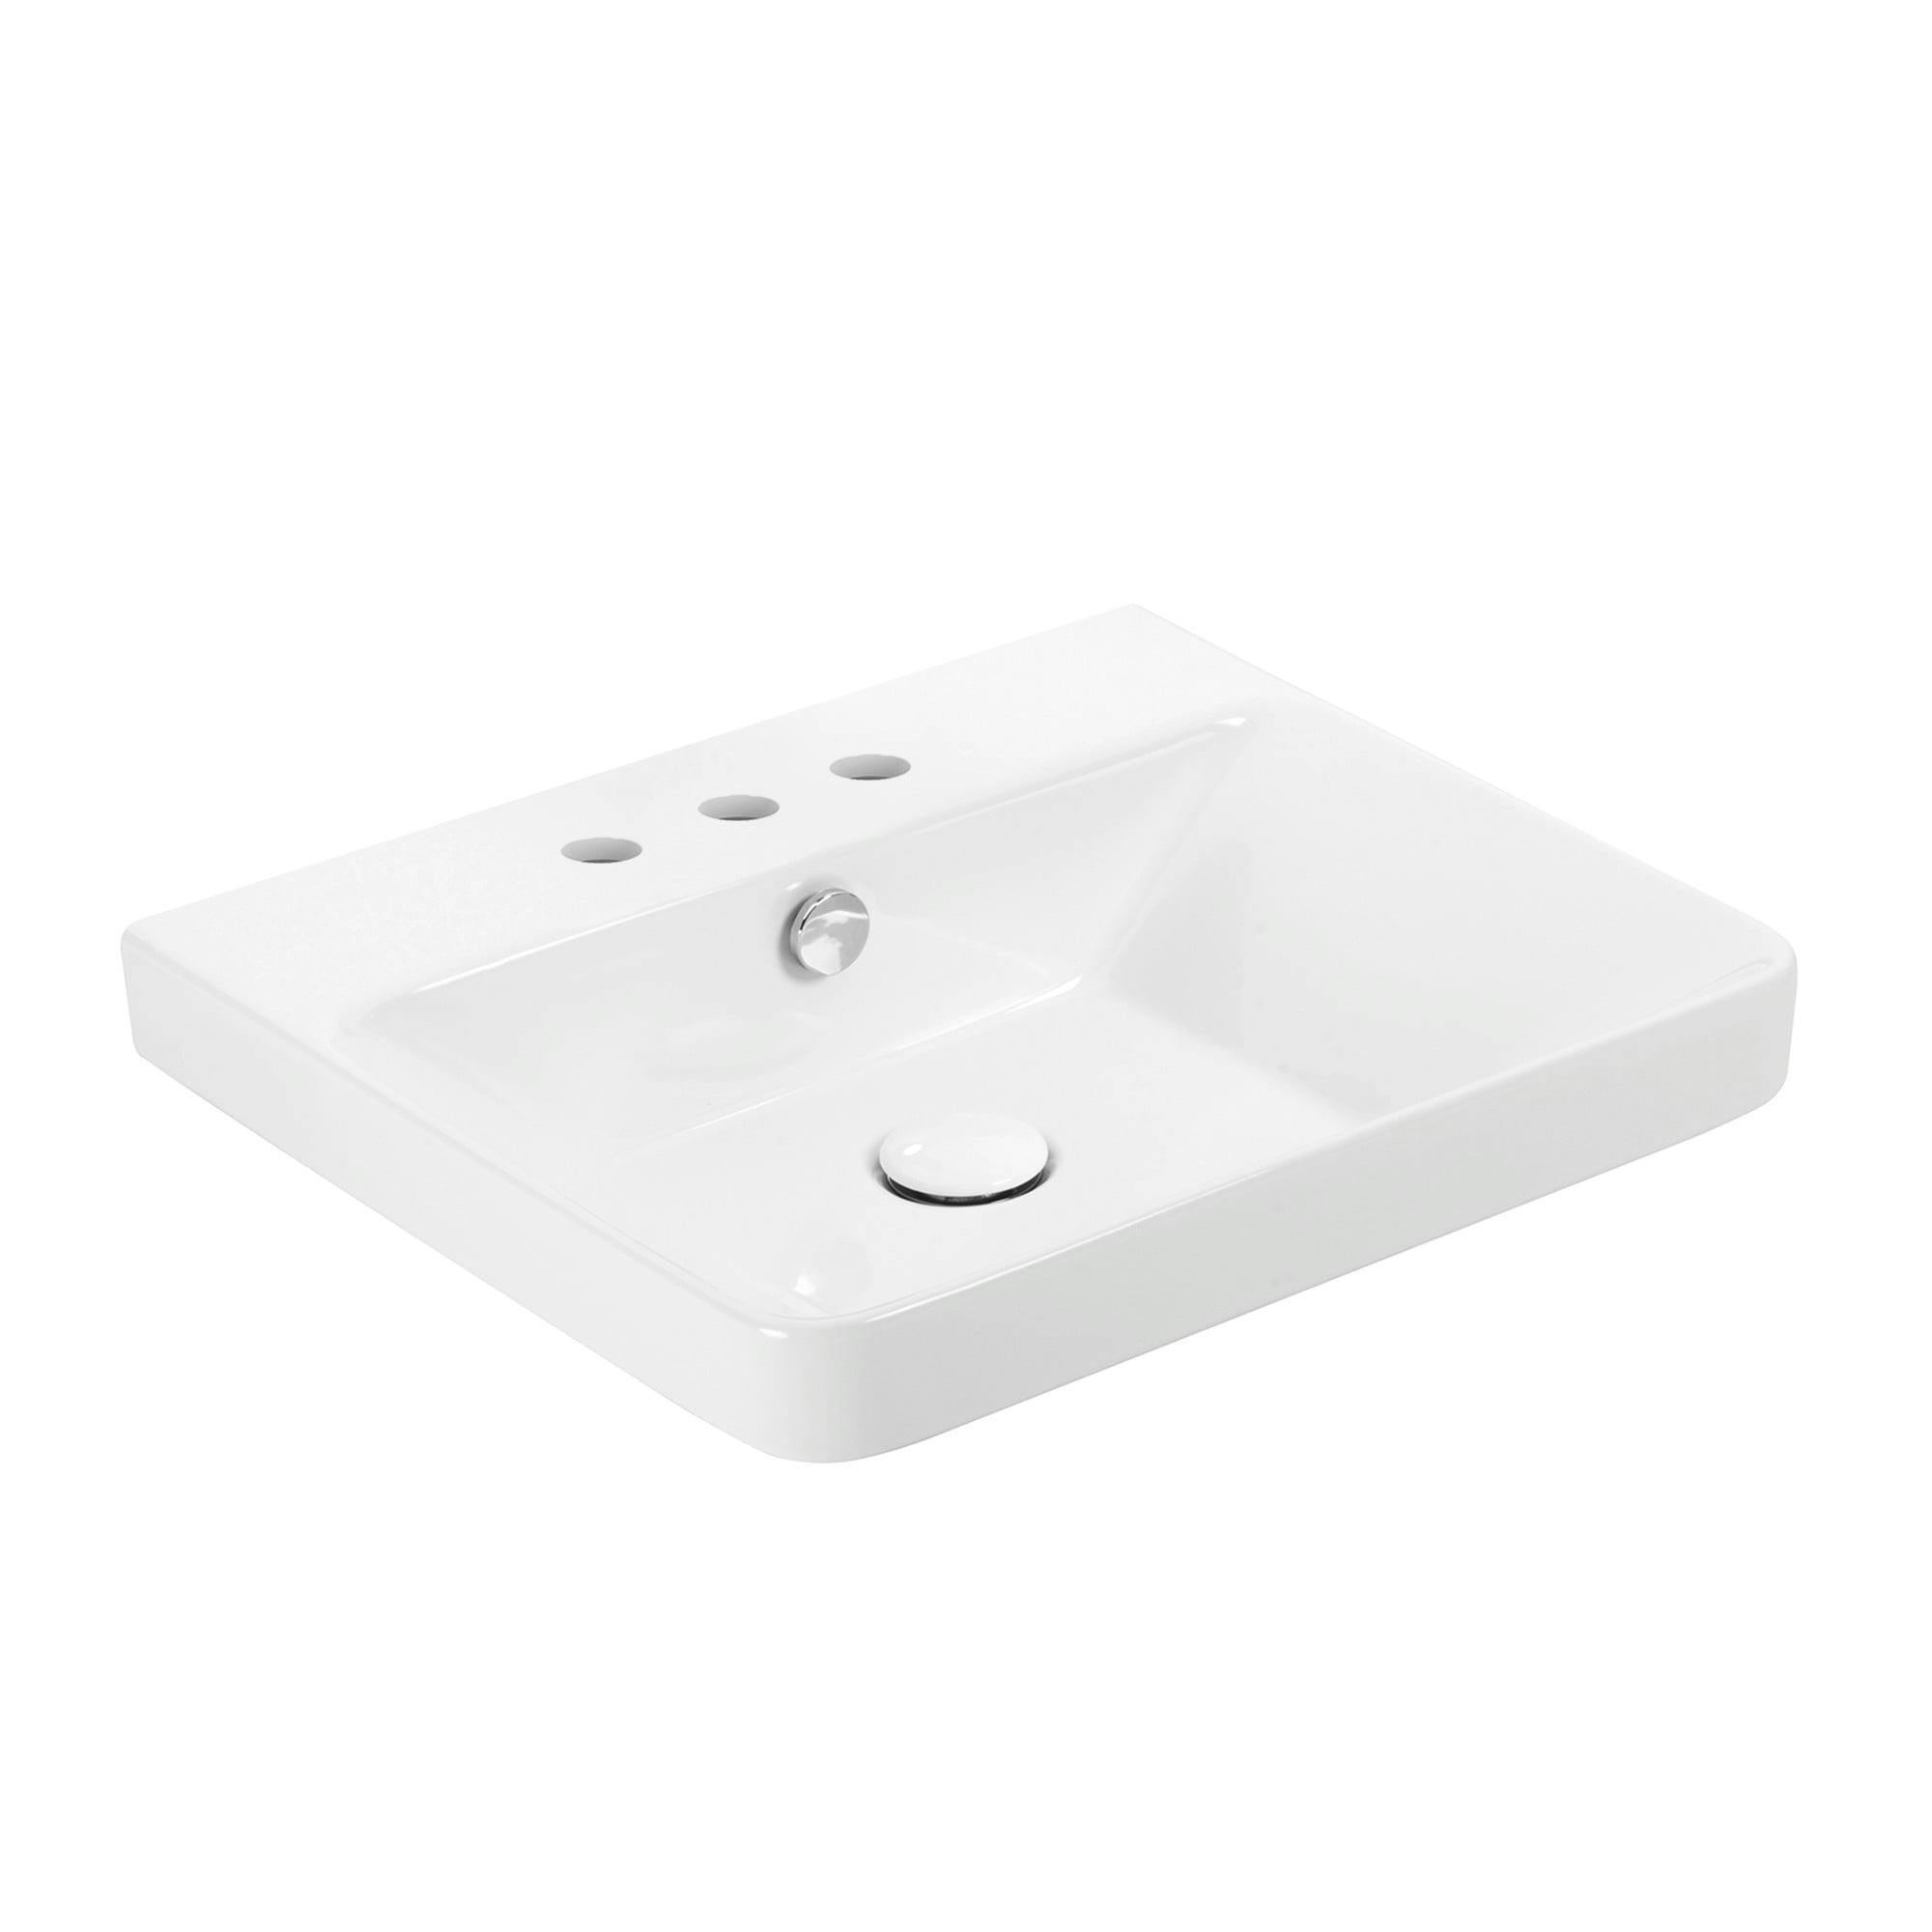 Glossy White Ceramic Rectangular Wall-Mount Bathroom Sink